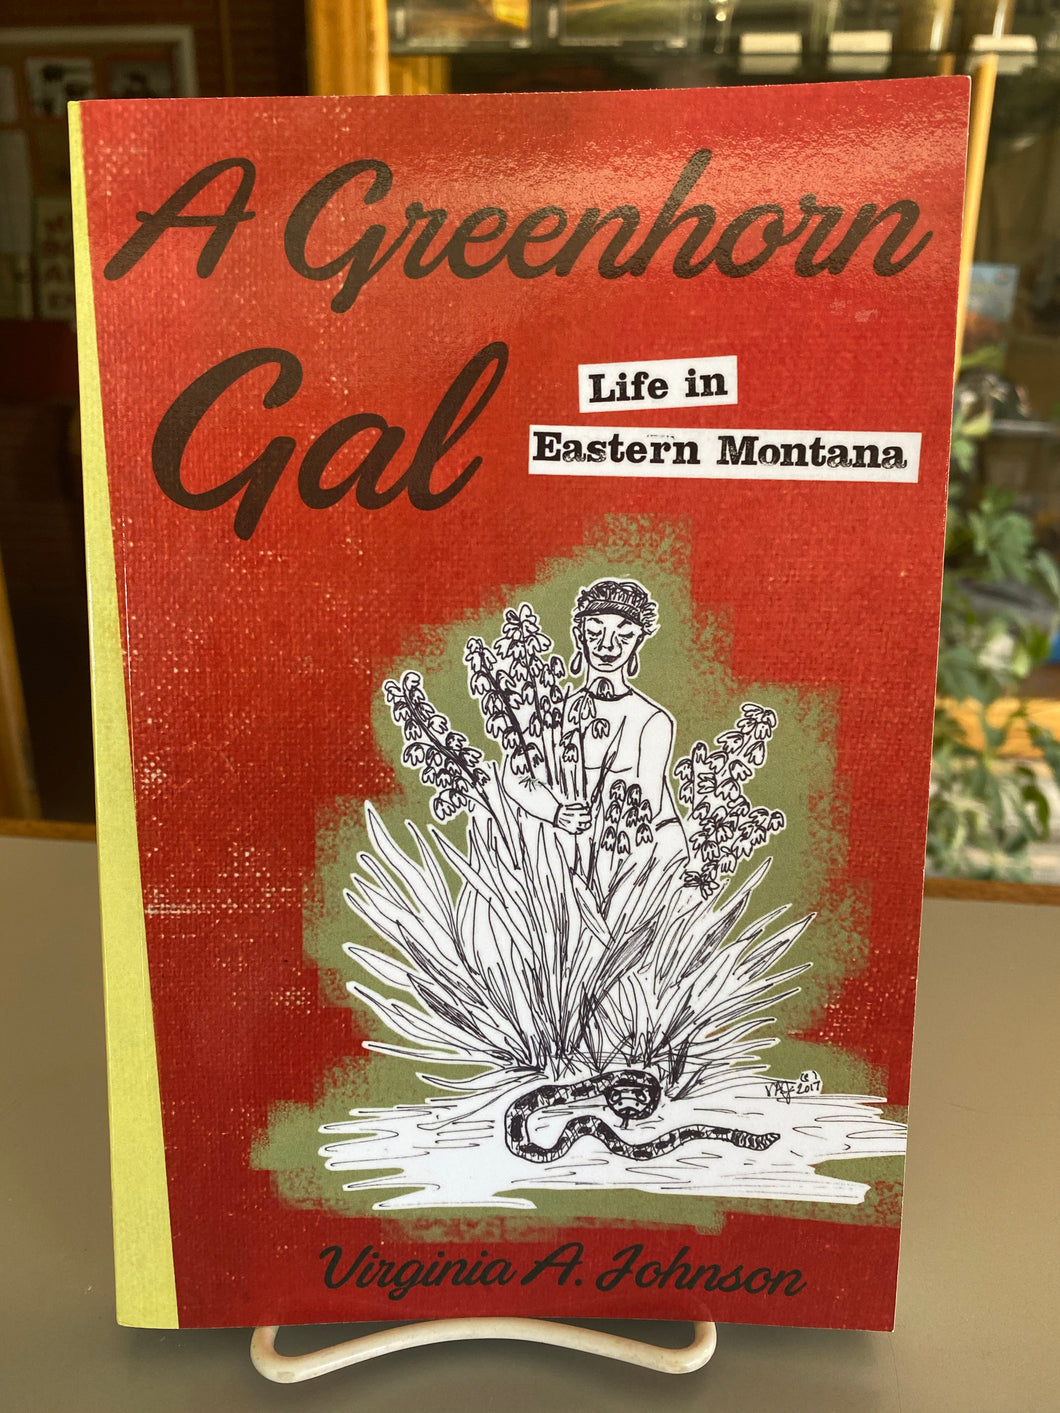 “A Greenhorn Gal” by Virginia Johnson